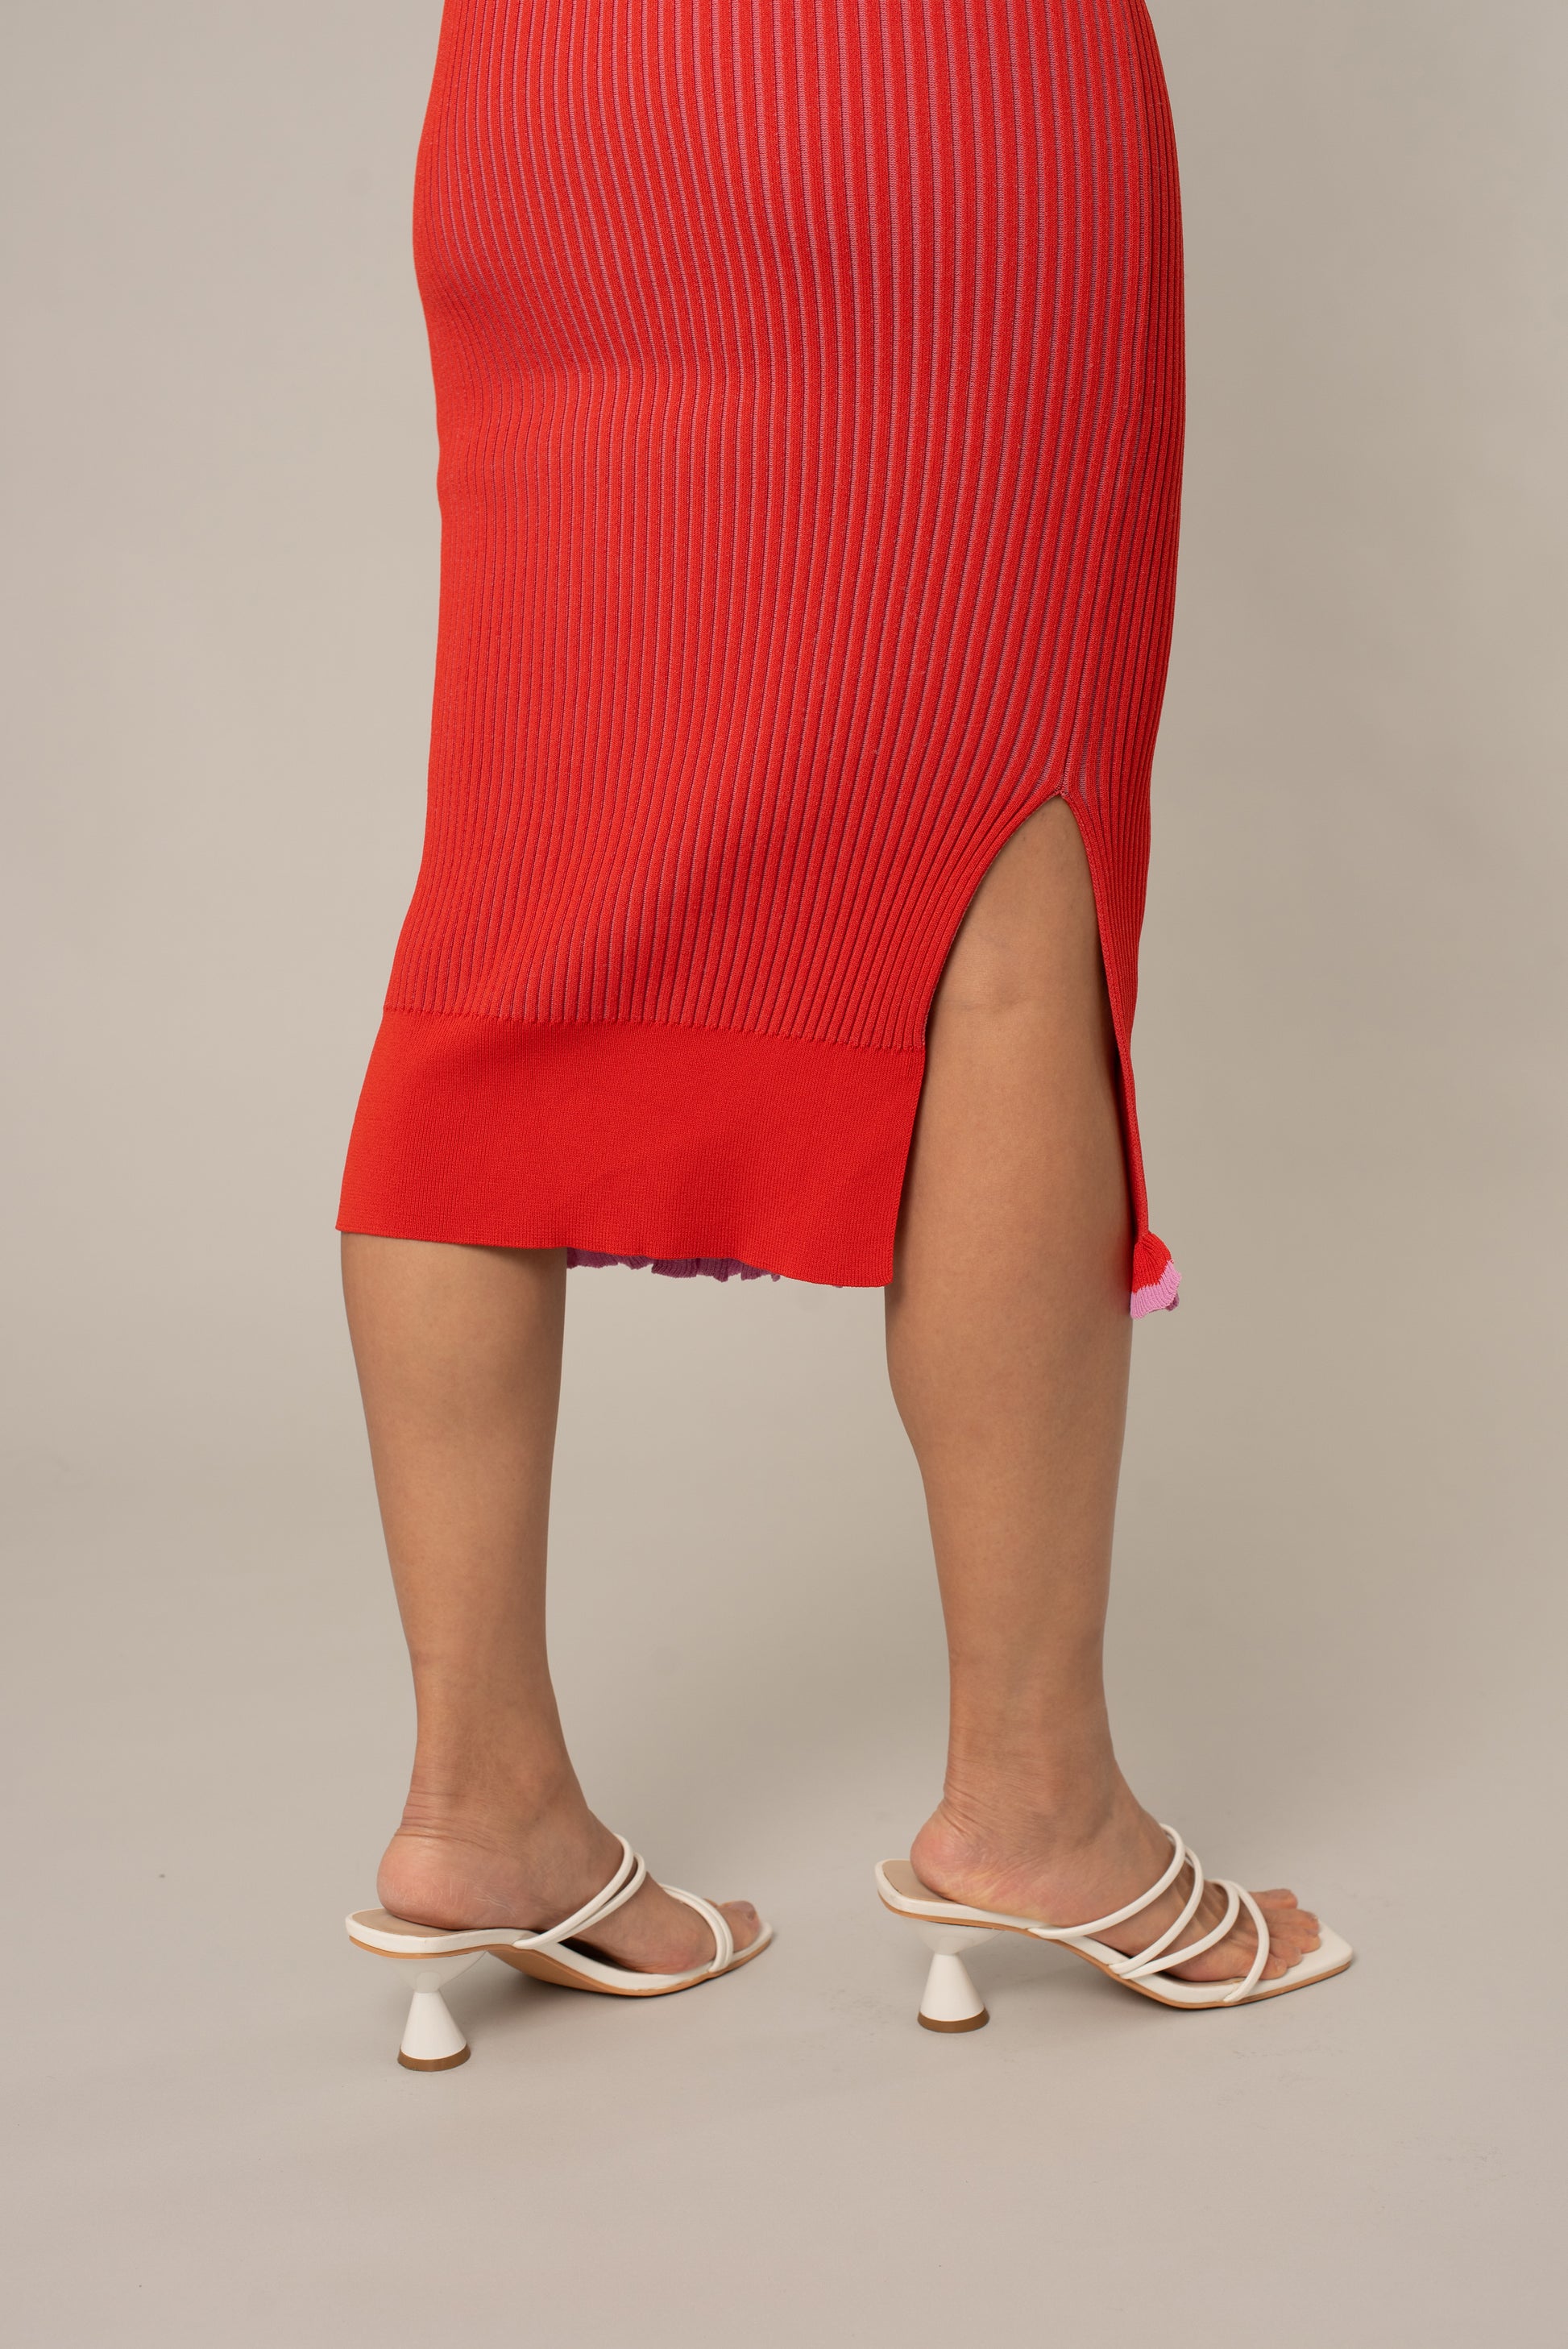 aurea alice skirt red, slit, clothes for athletic women